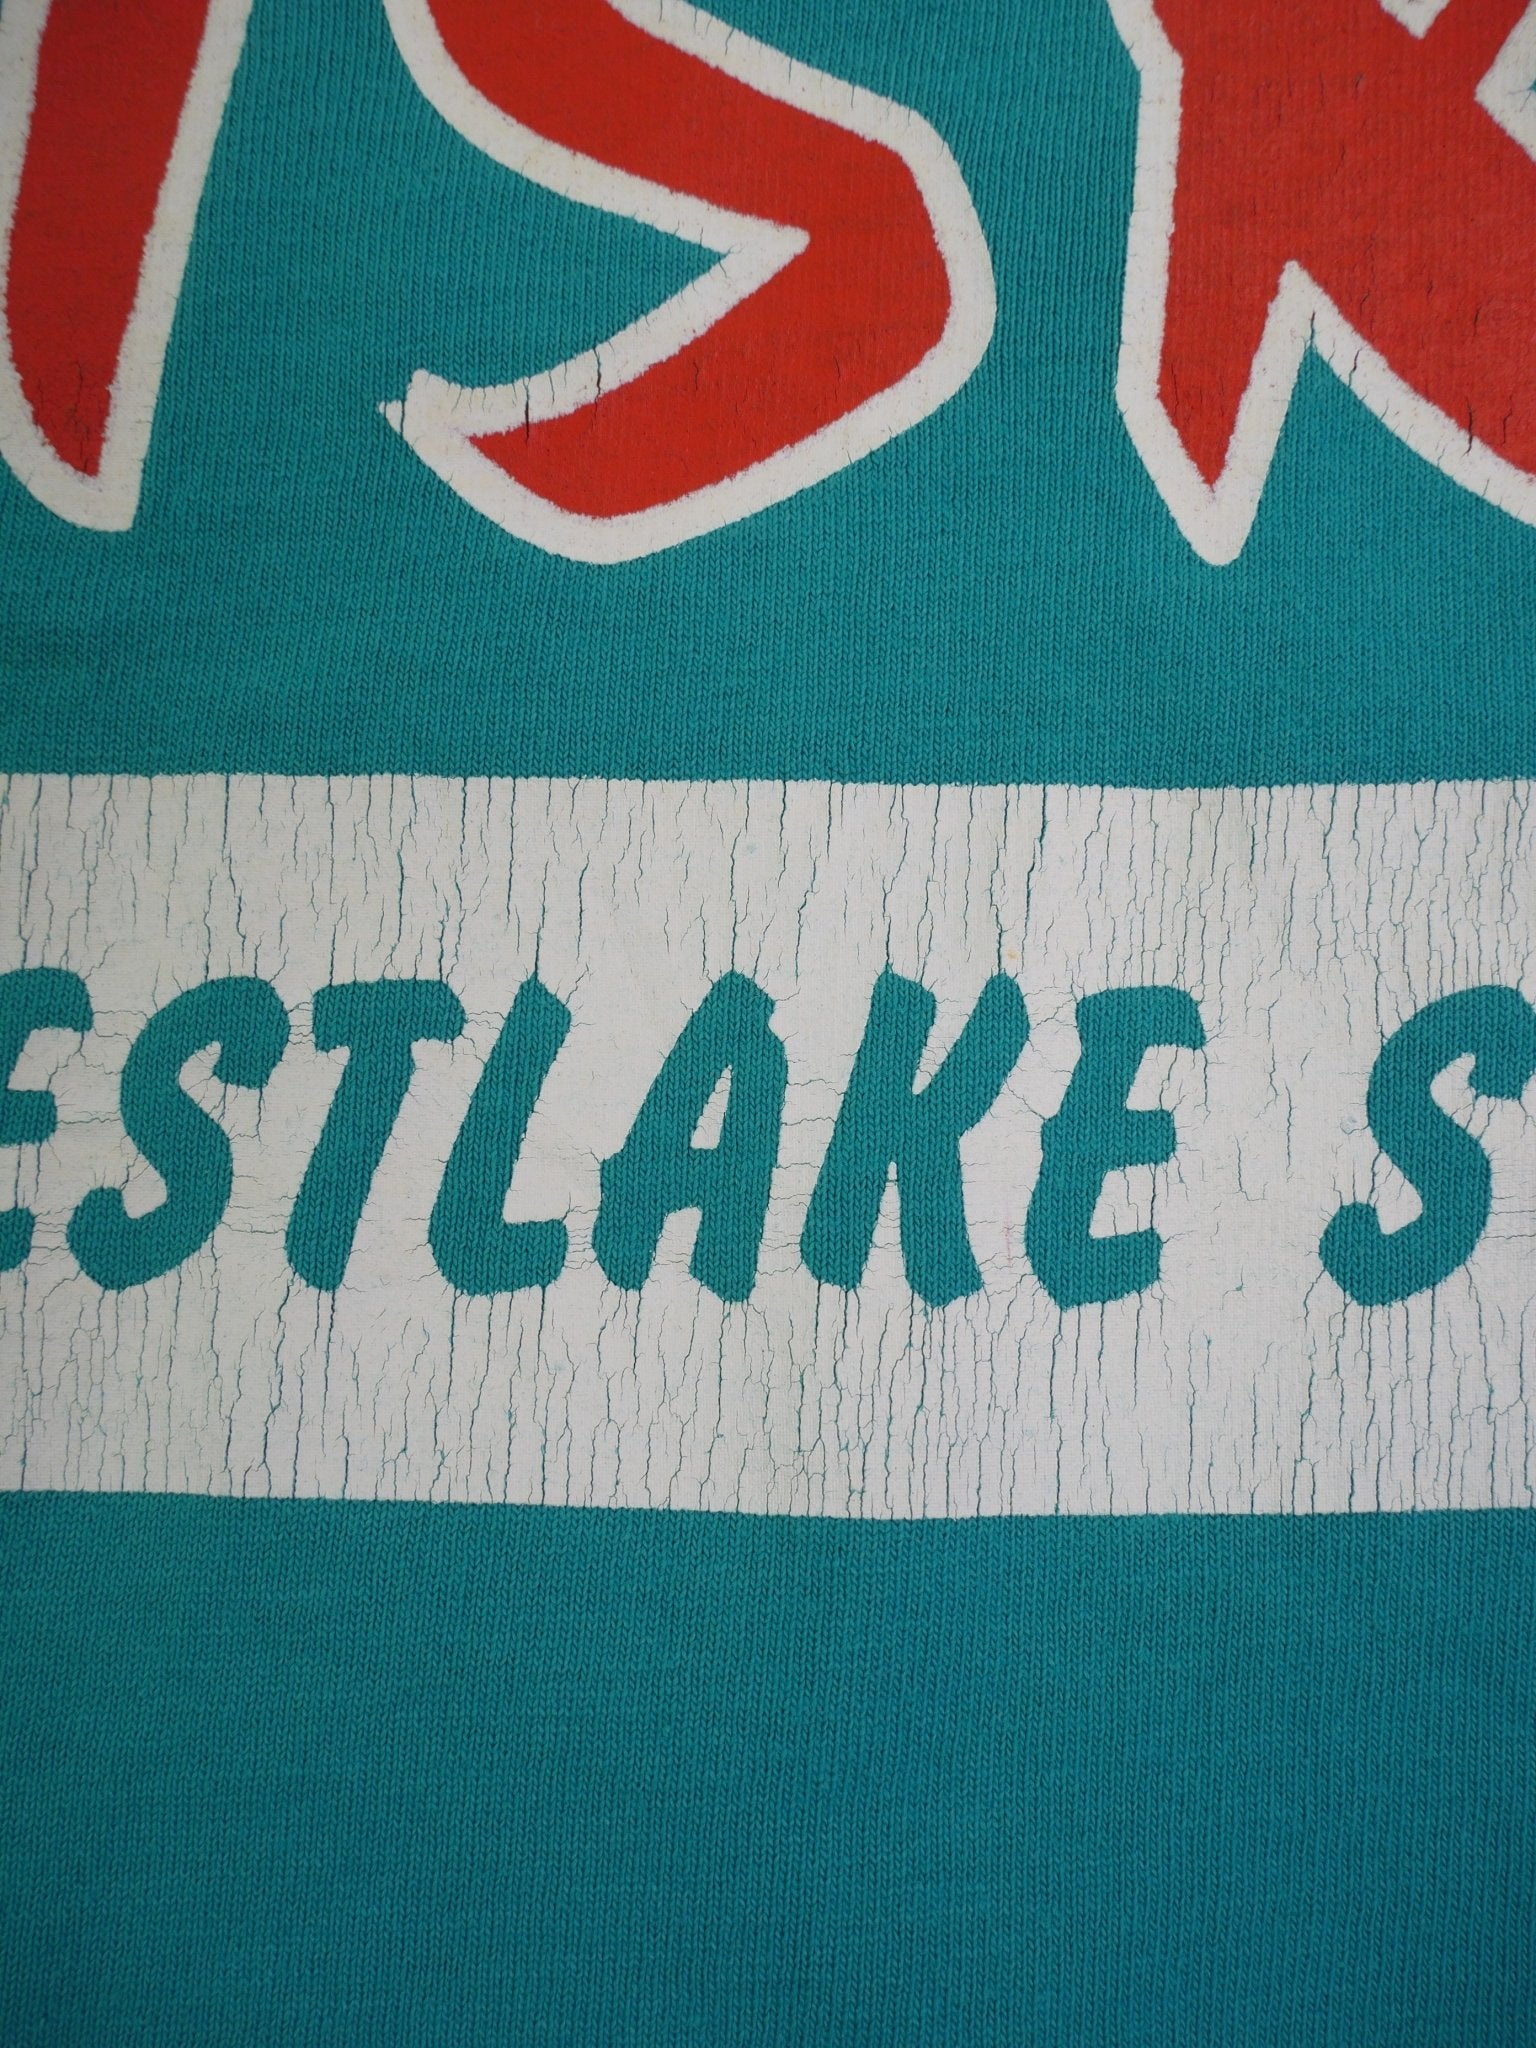 Westlake Softball printed Logo Vintage Shirt - Peeces